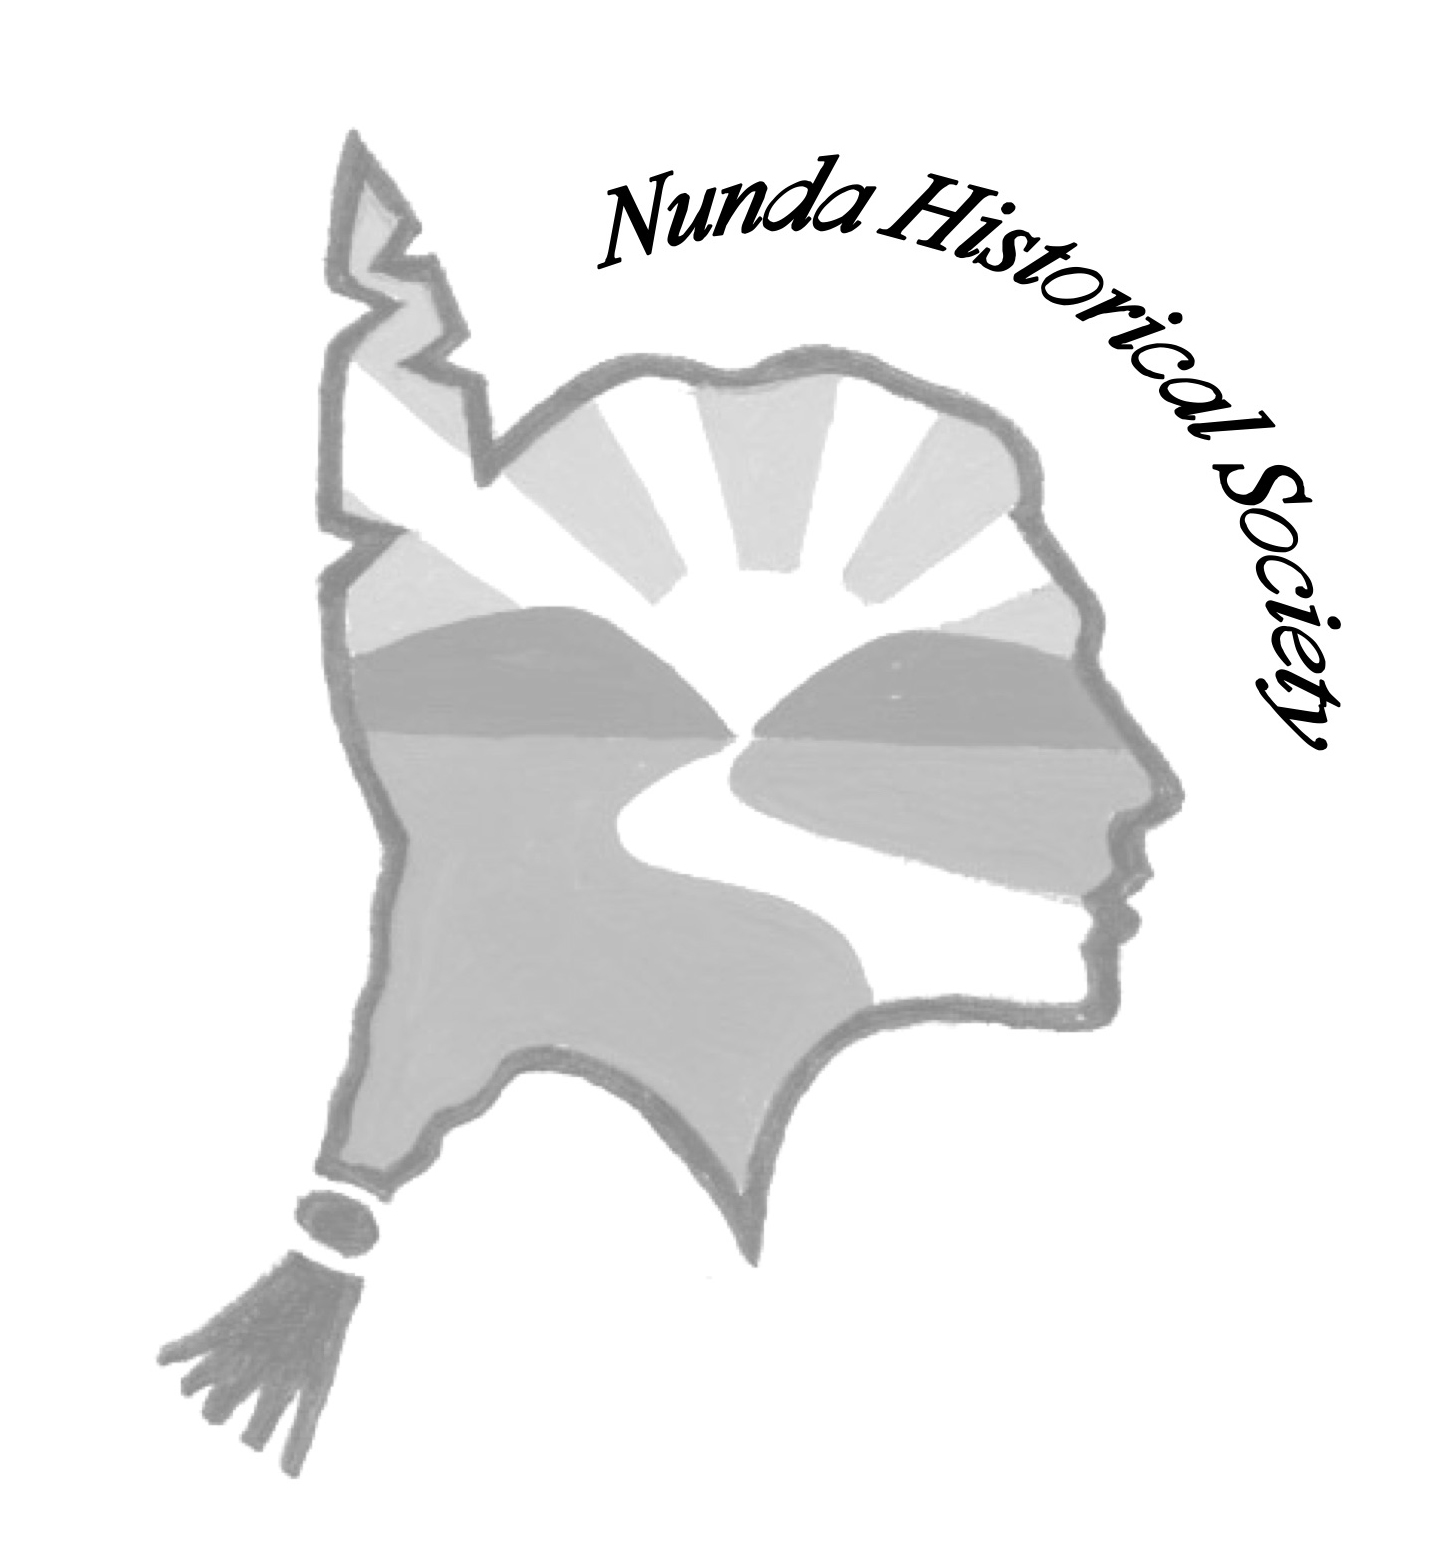 Nunda Historical Society